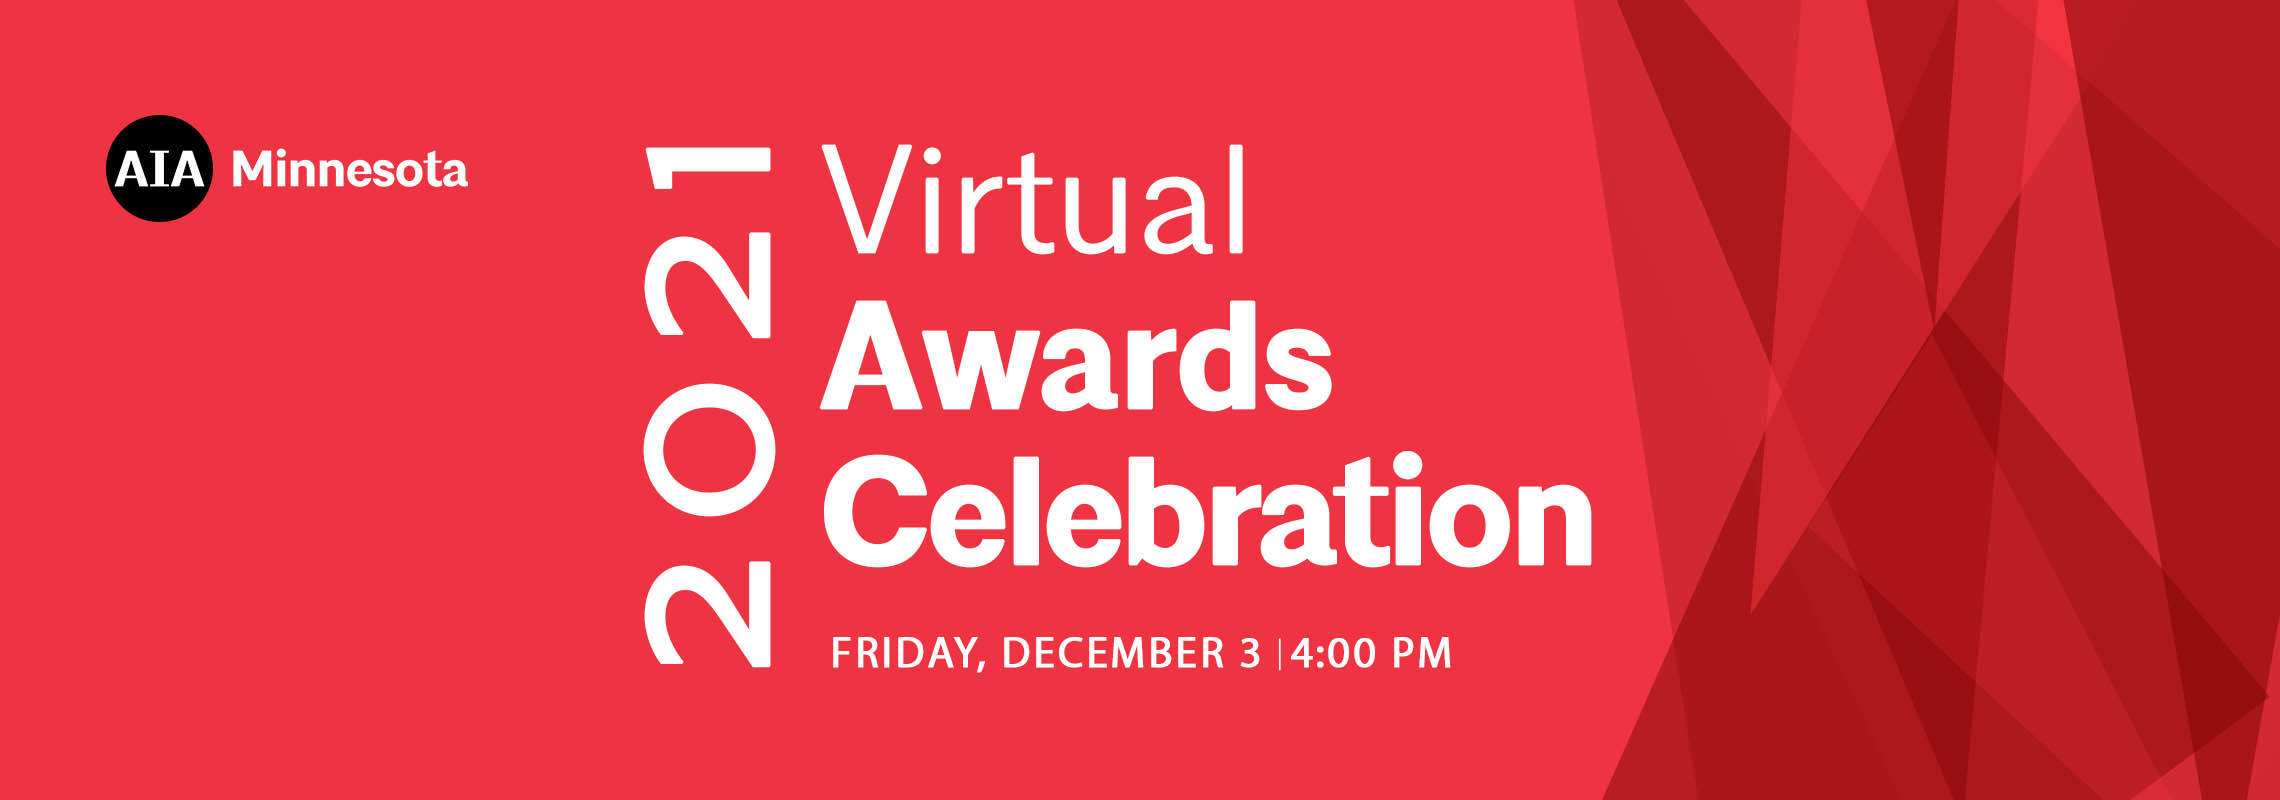 Virtual Awards Celebration